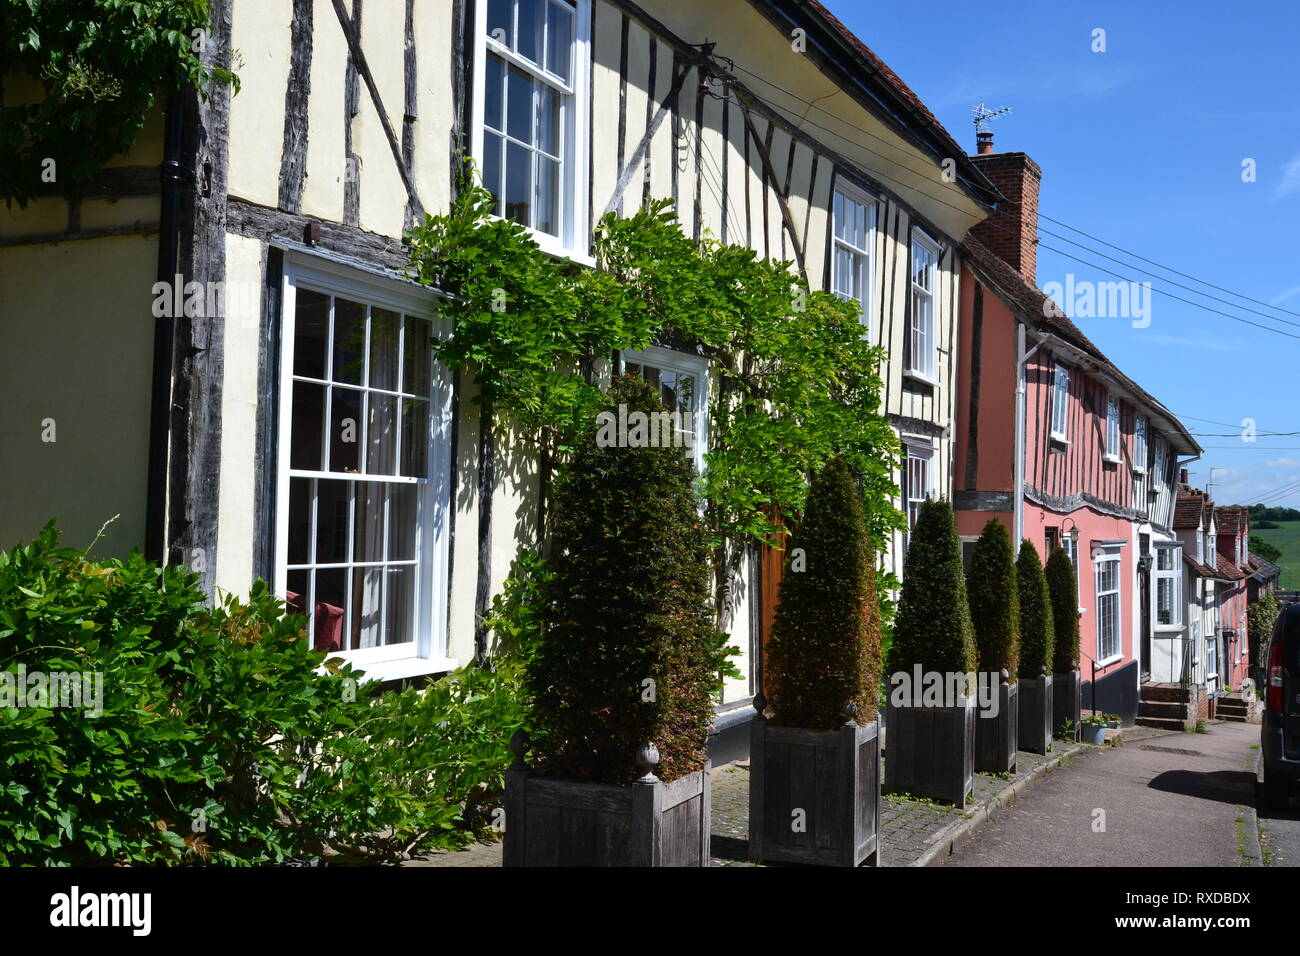 Historic Tudor half-timbered buildings in Lavenham, Suffolk, UK. Sunny day. Stock Photo